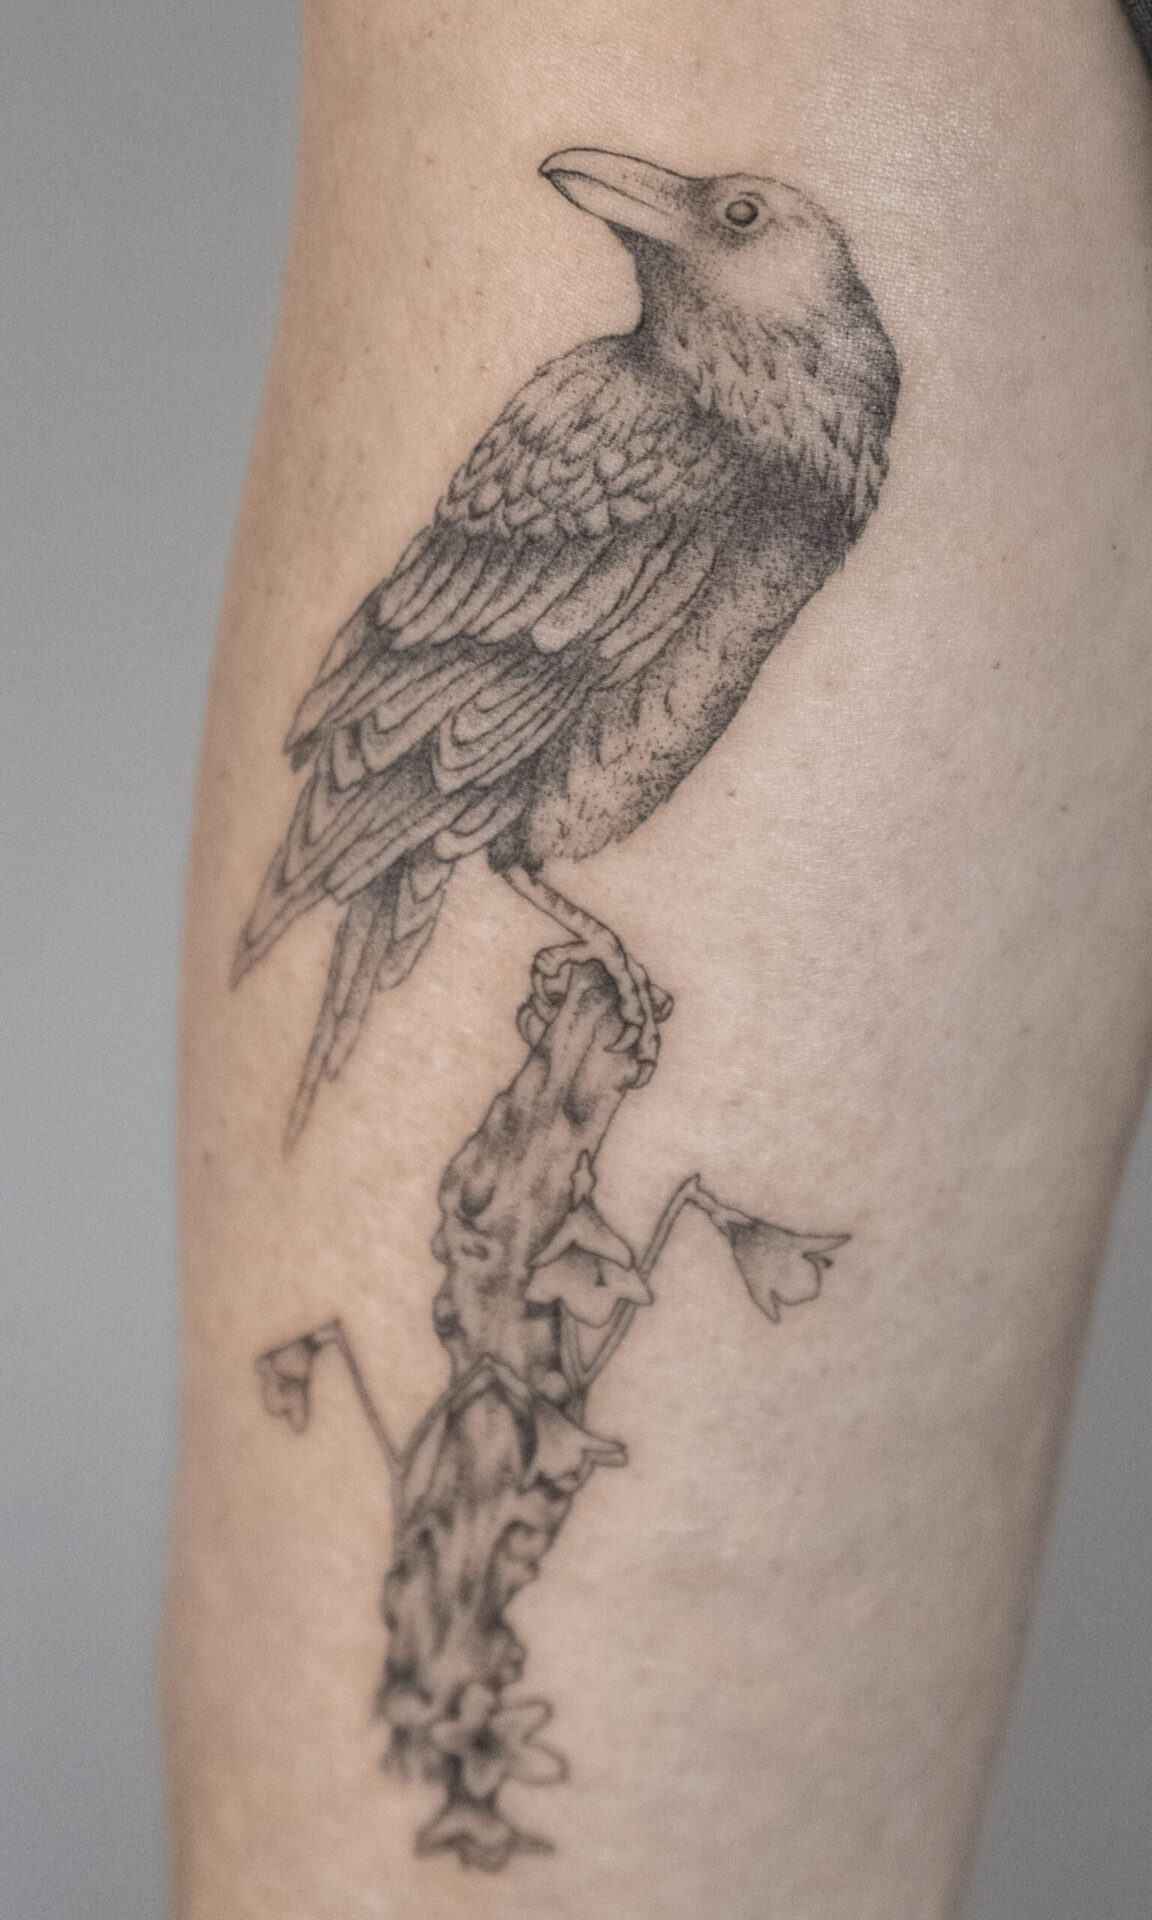 upper arm fineline crow tattoo from smasli ink an female tattoo artist working in salzburg austria